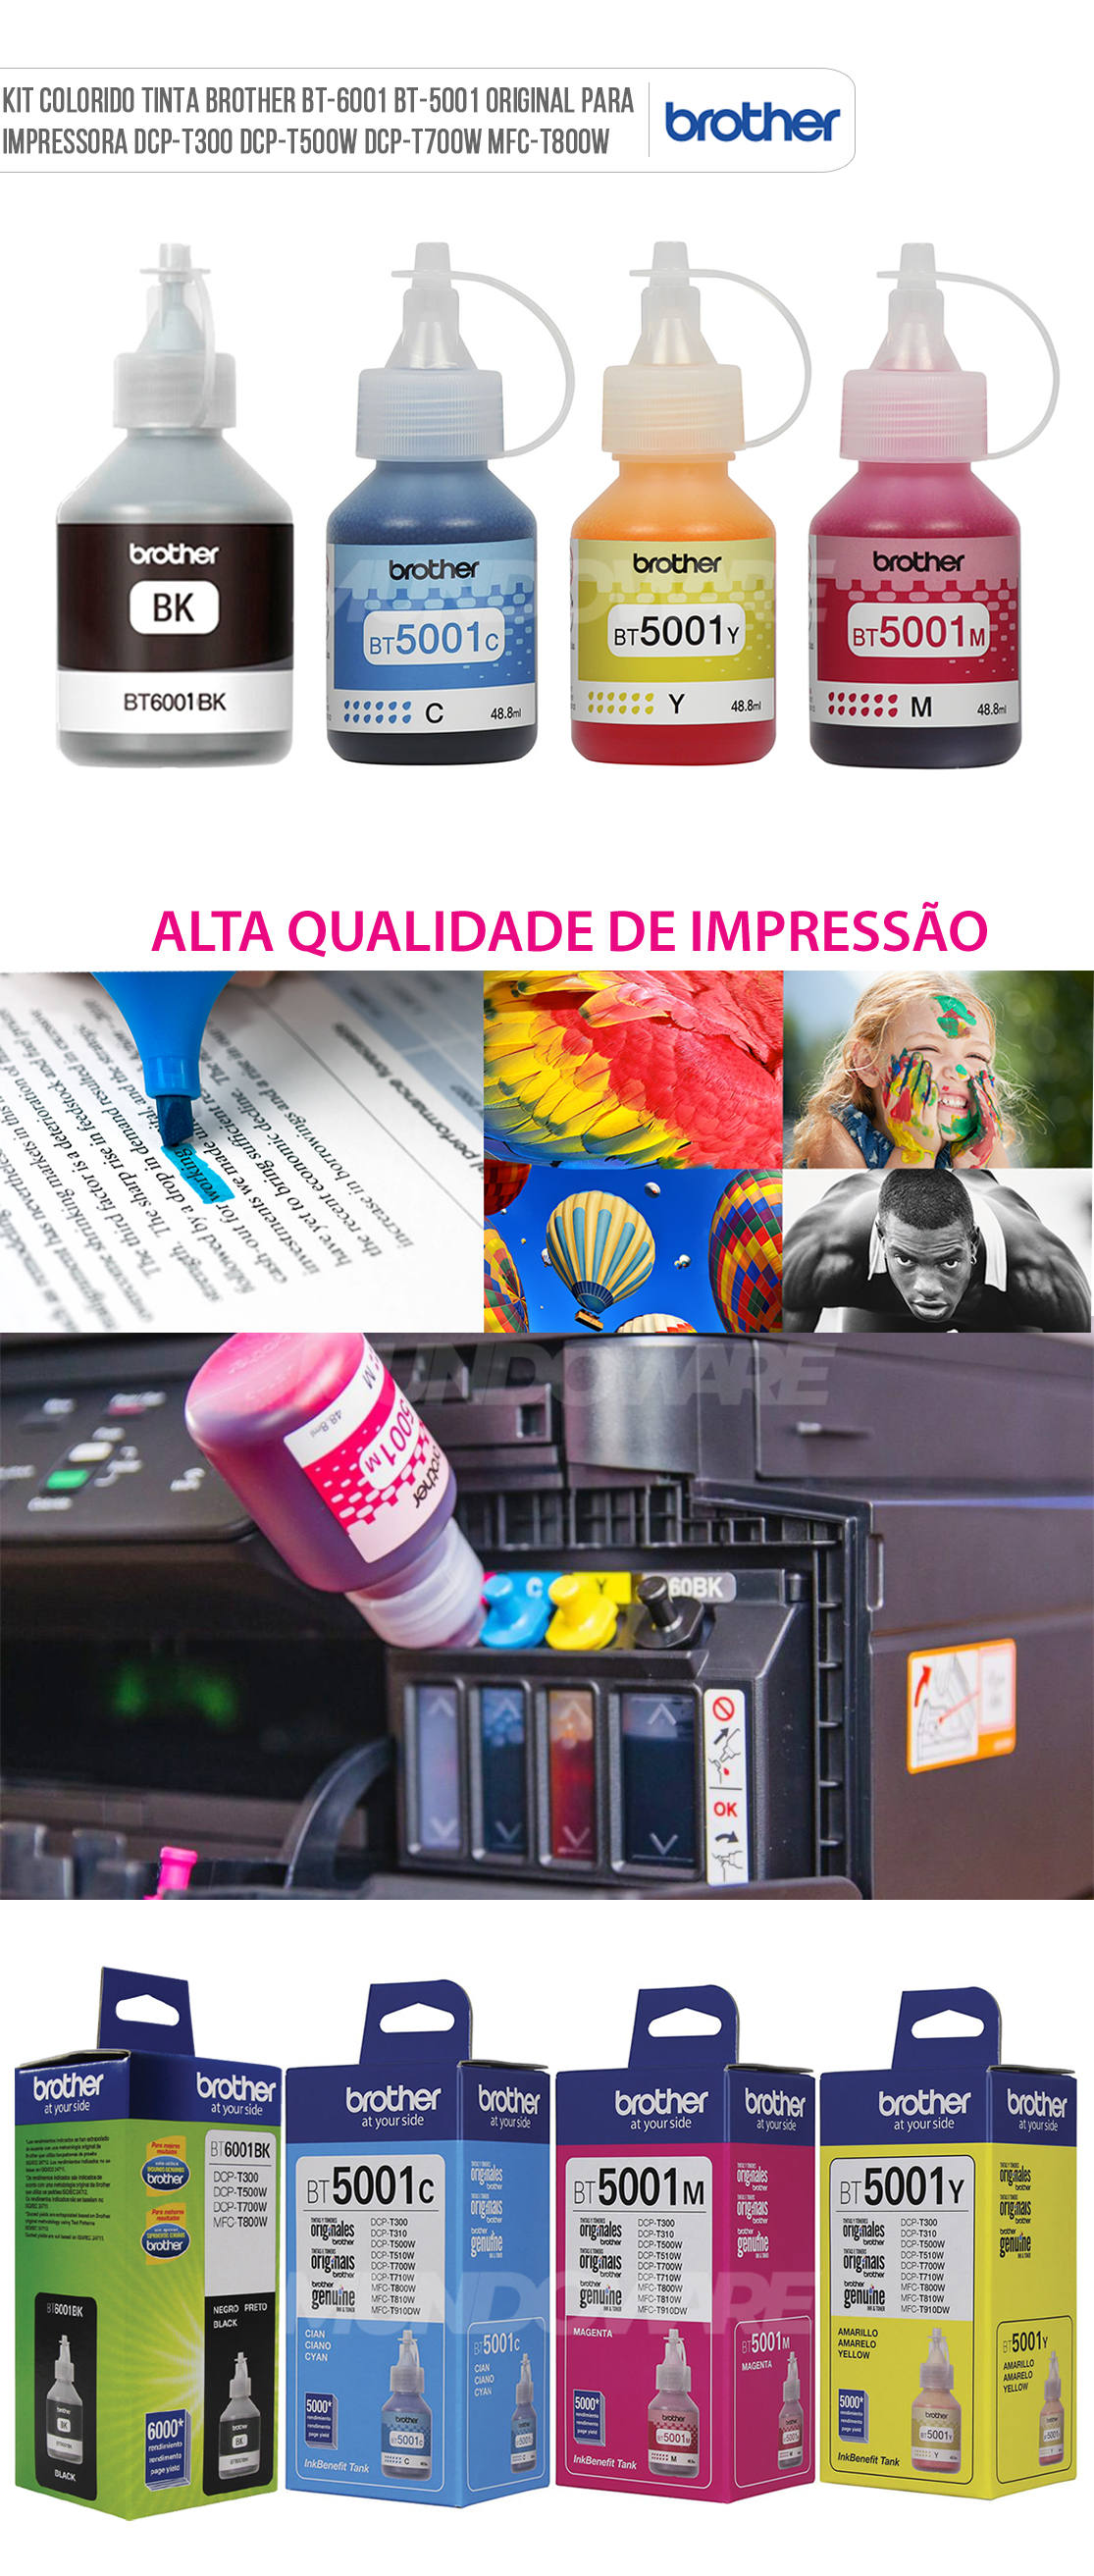 Kit Colorido Tinta Brother BT-6001 BT-5001 Original para Impressora DCP-T300 DCP-T500W DCP-T700W MFC-T800W